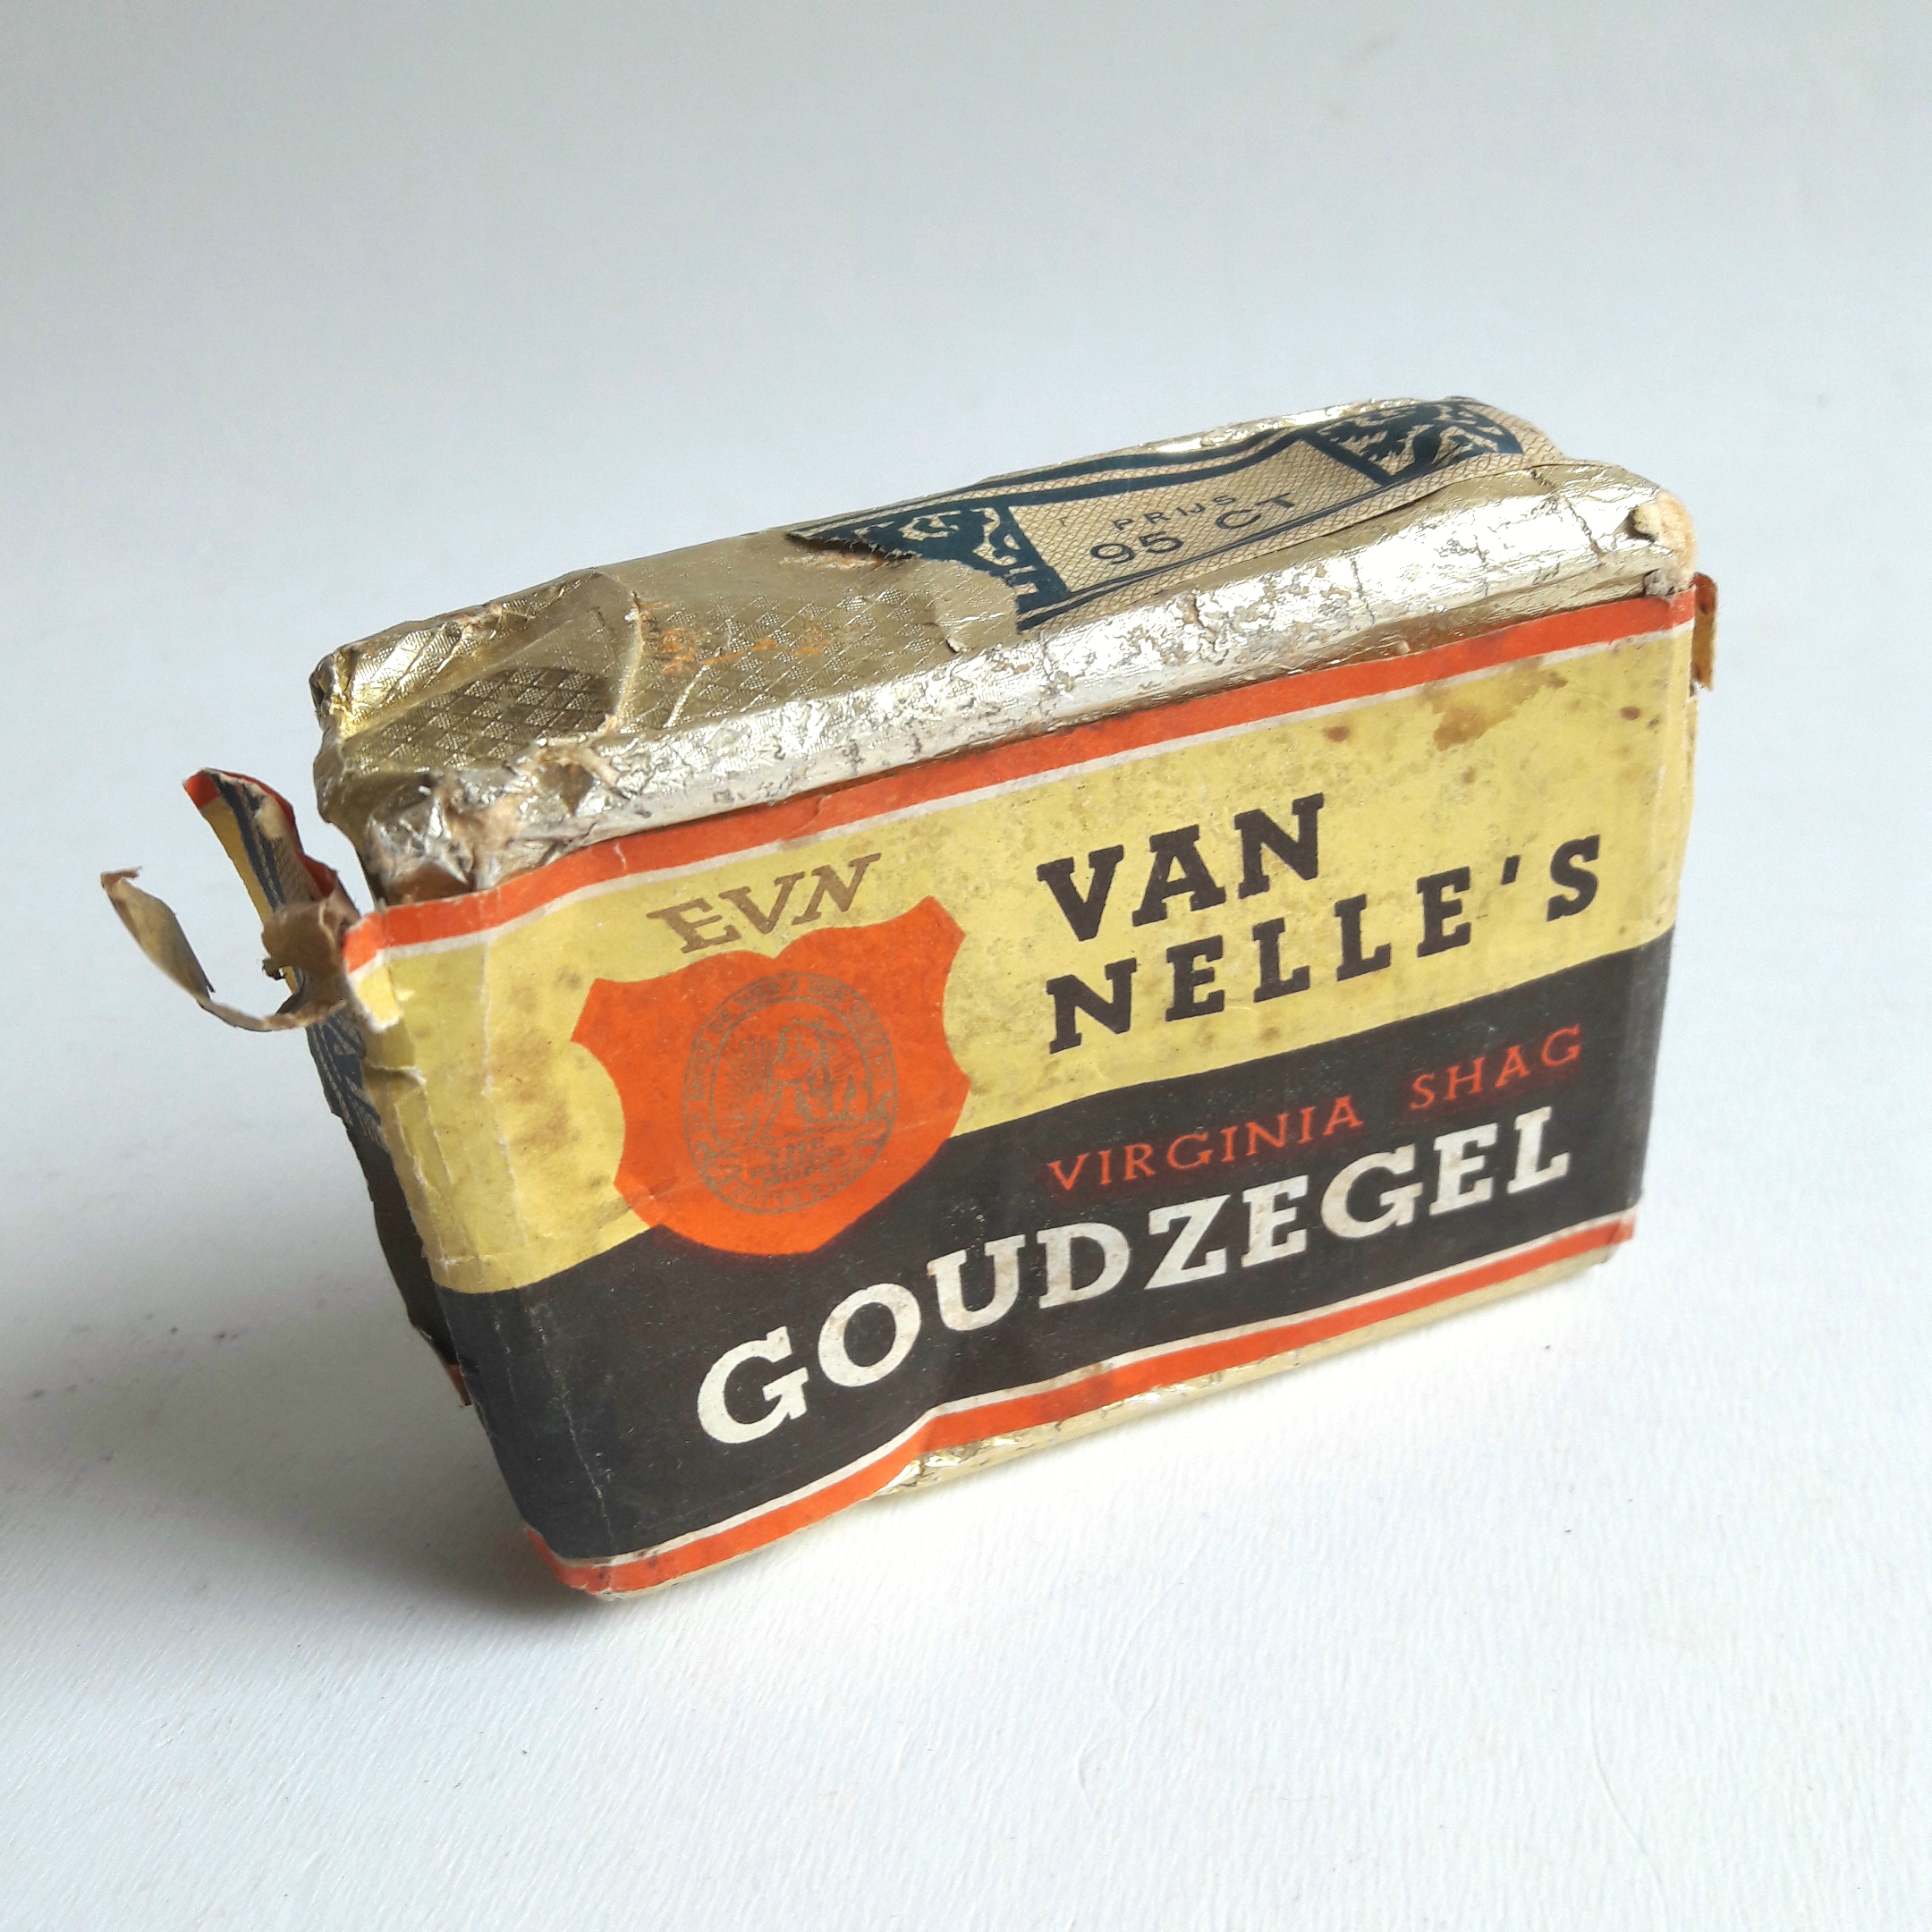 Van Nelle's Goudzegel shag